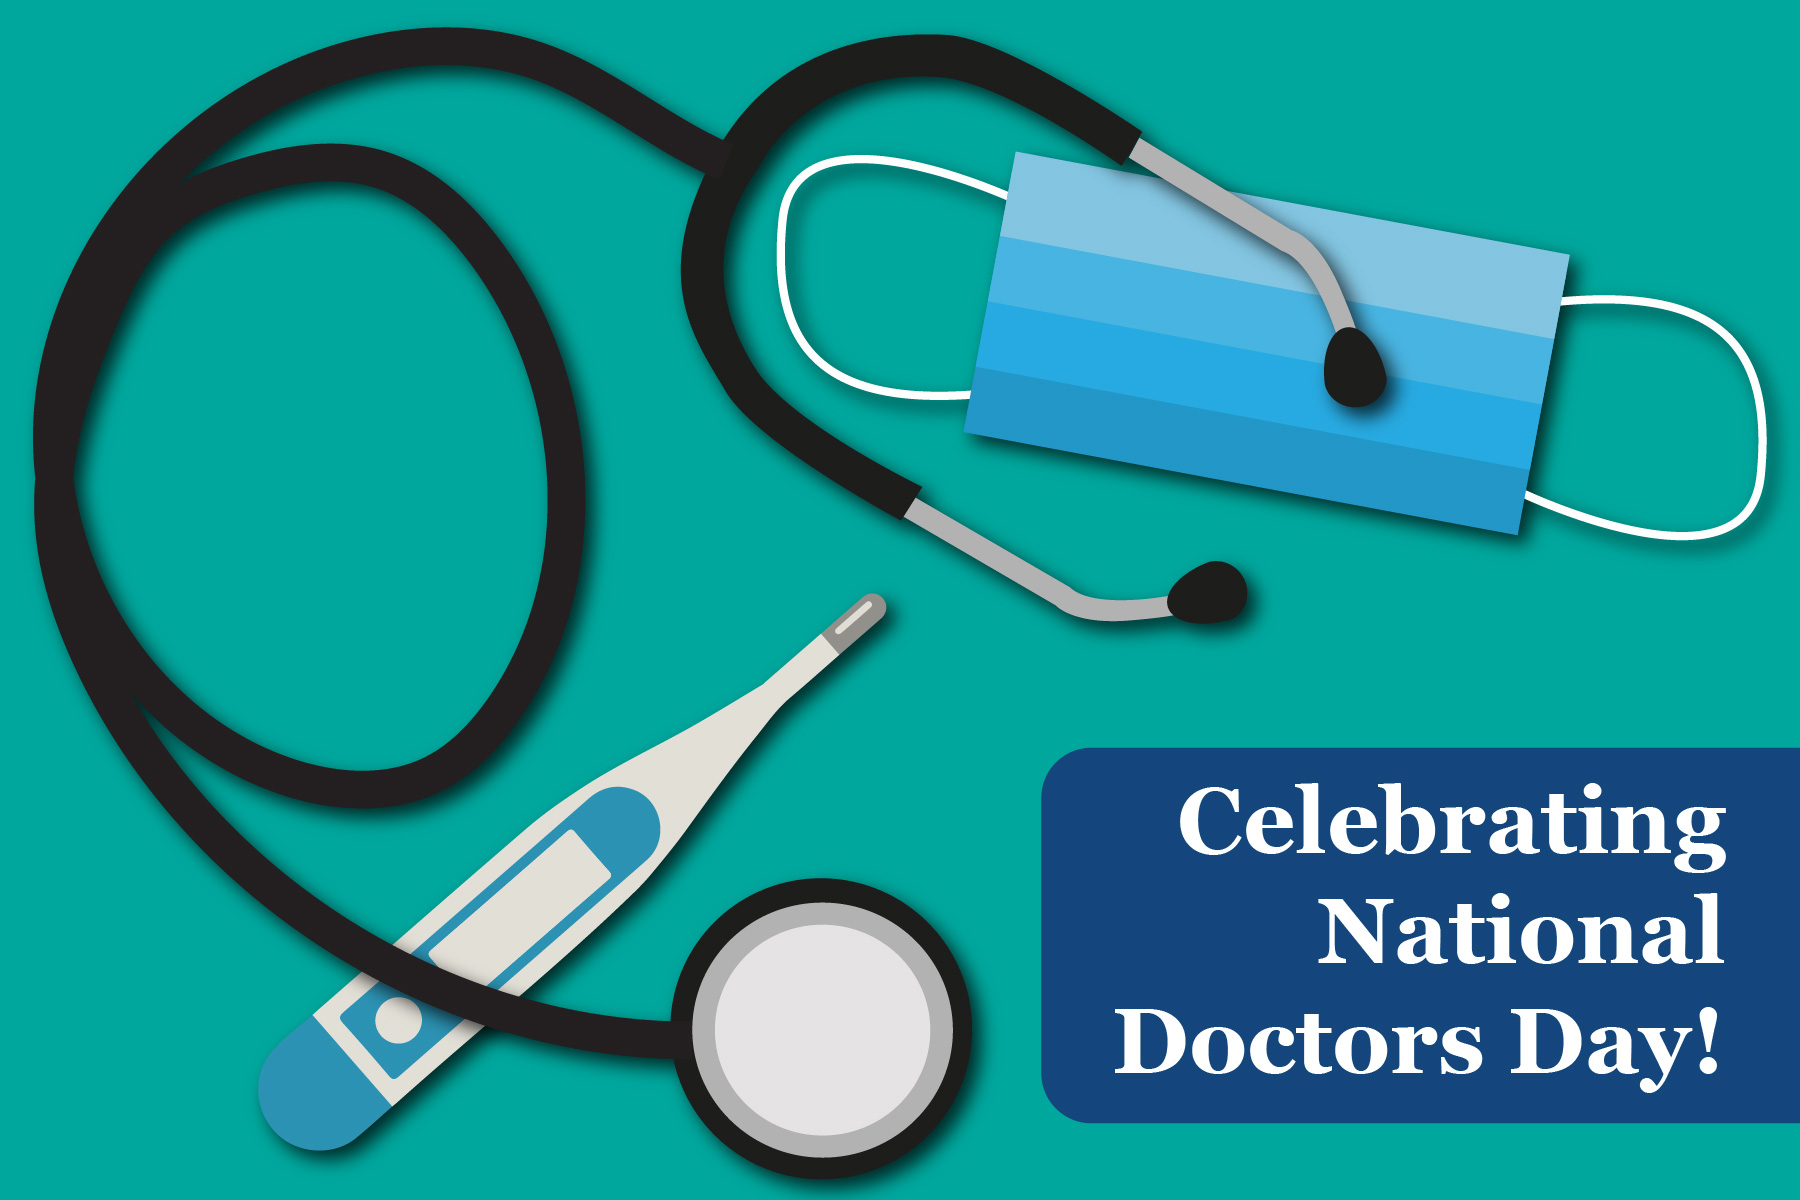 Celebrating National Doctors Day!